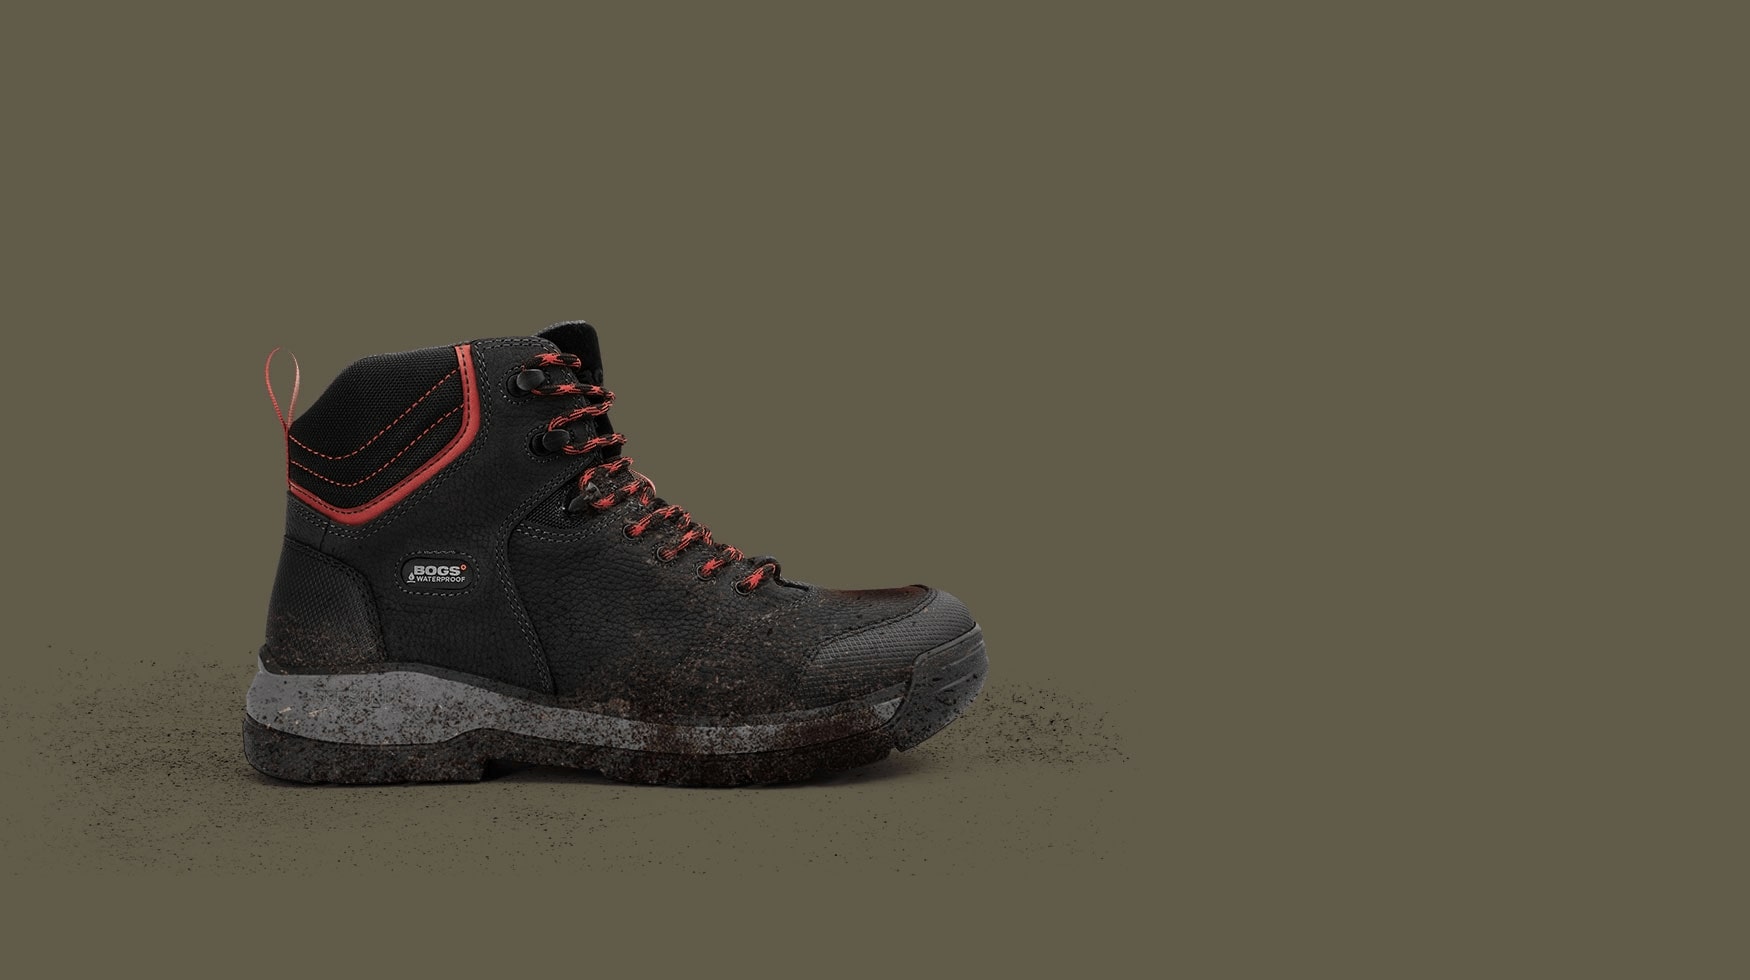 Shop the Men's Bedrock II 6" WP waterproof work boots. The featured product is the Men's Bedrock II 6" WP in Black 